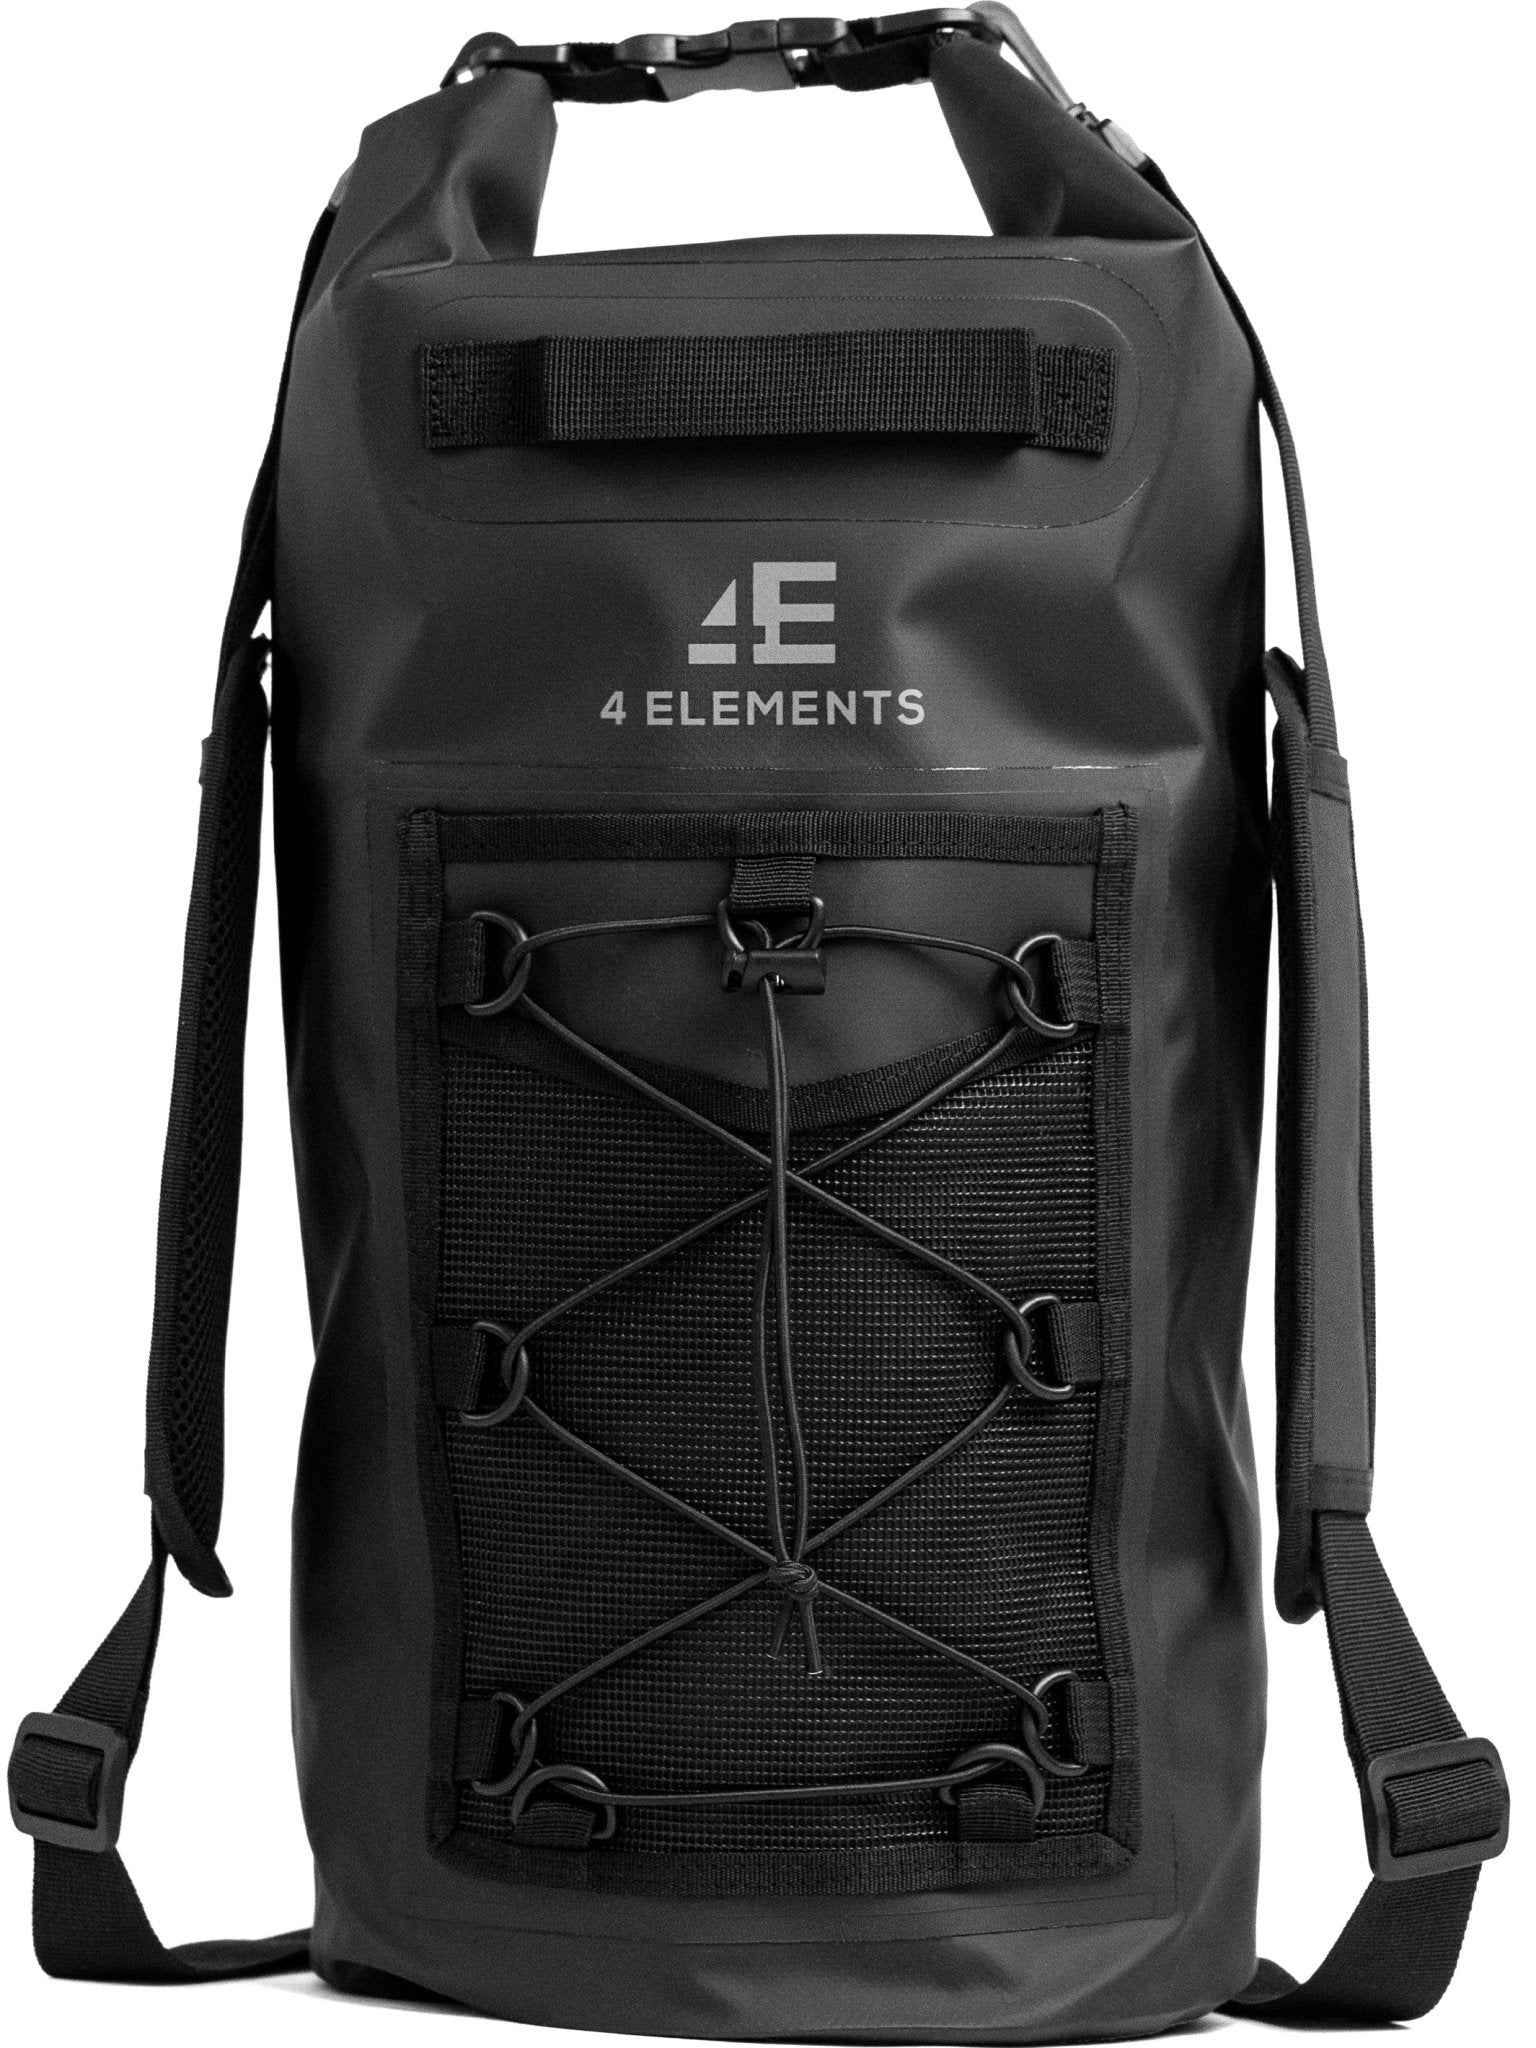 4elementsclothing4 Elements Clothing4 Elements - Waterproof bag and Dry Bag Roll Top waterproof Rucksack, Wet bag & Hiking, waters sports or camping bag, 20L drybagBag4EC-DBG20-BK